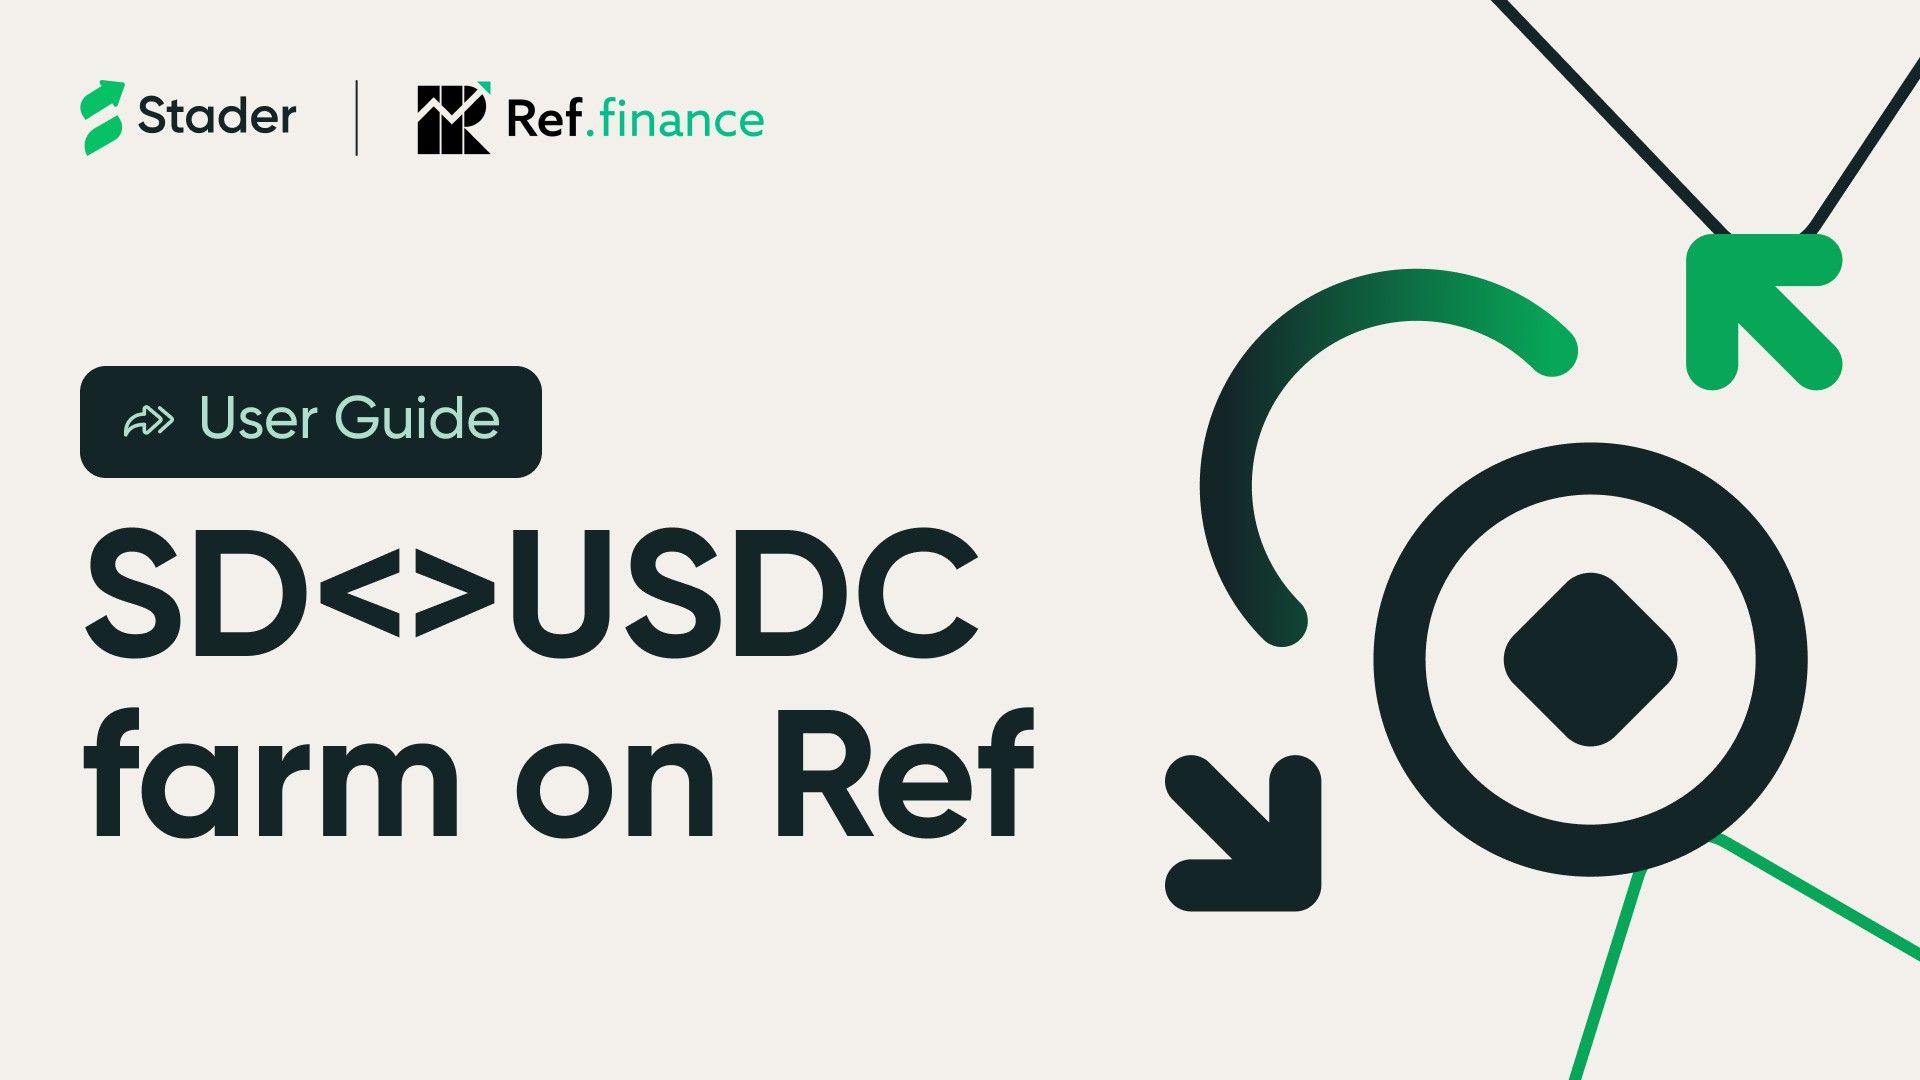 How to Add liquidity to SD<>USDC Farm on Ref Finance